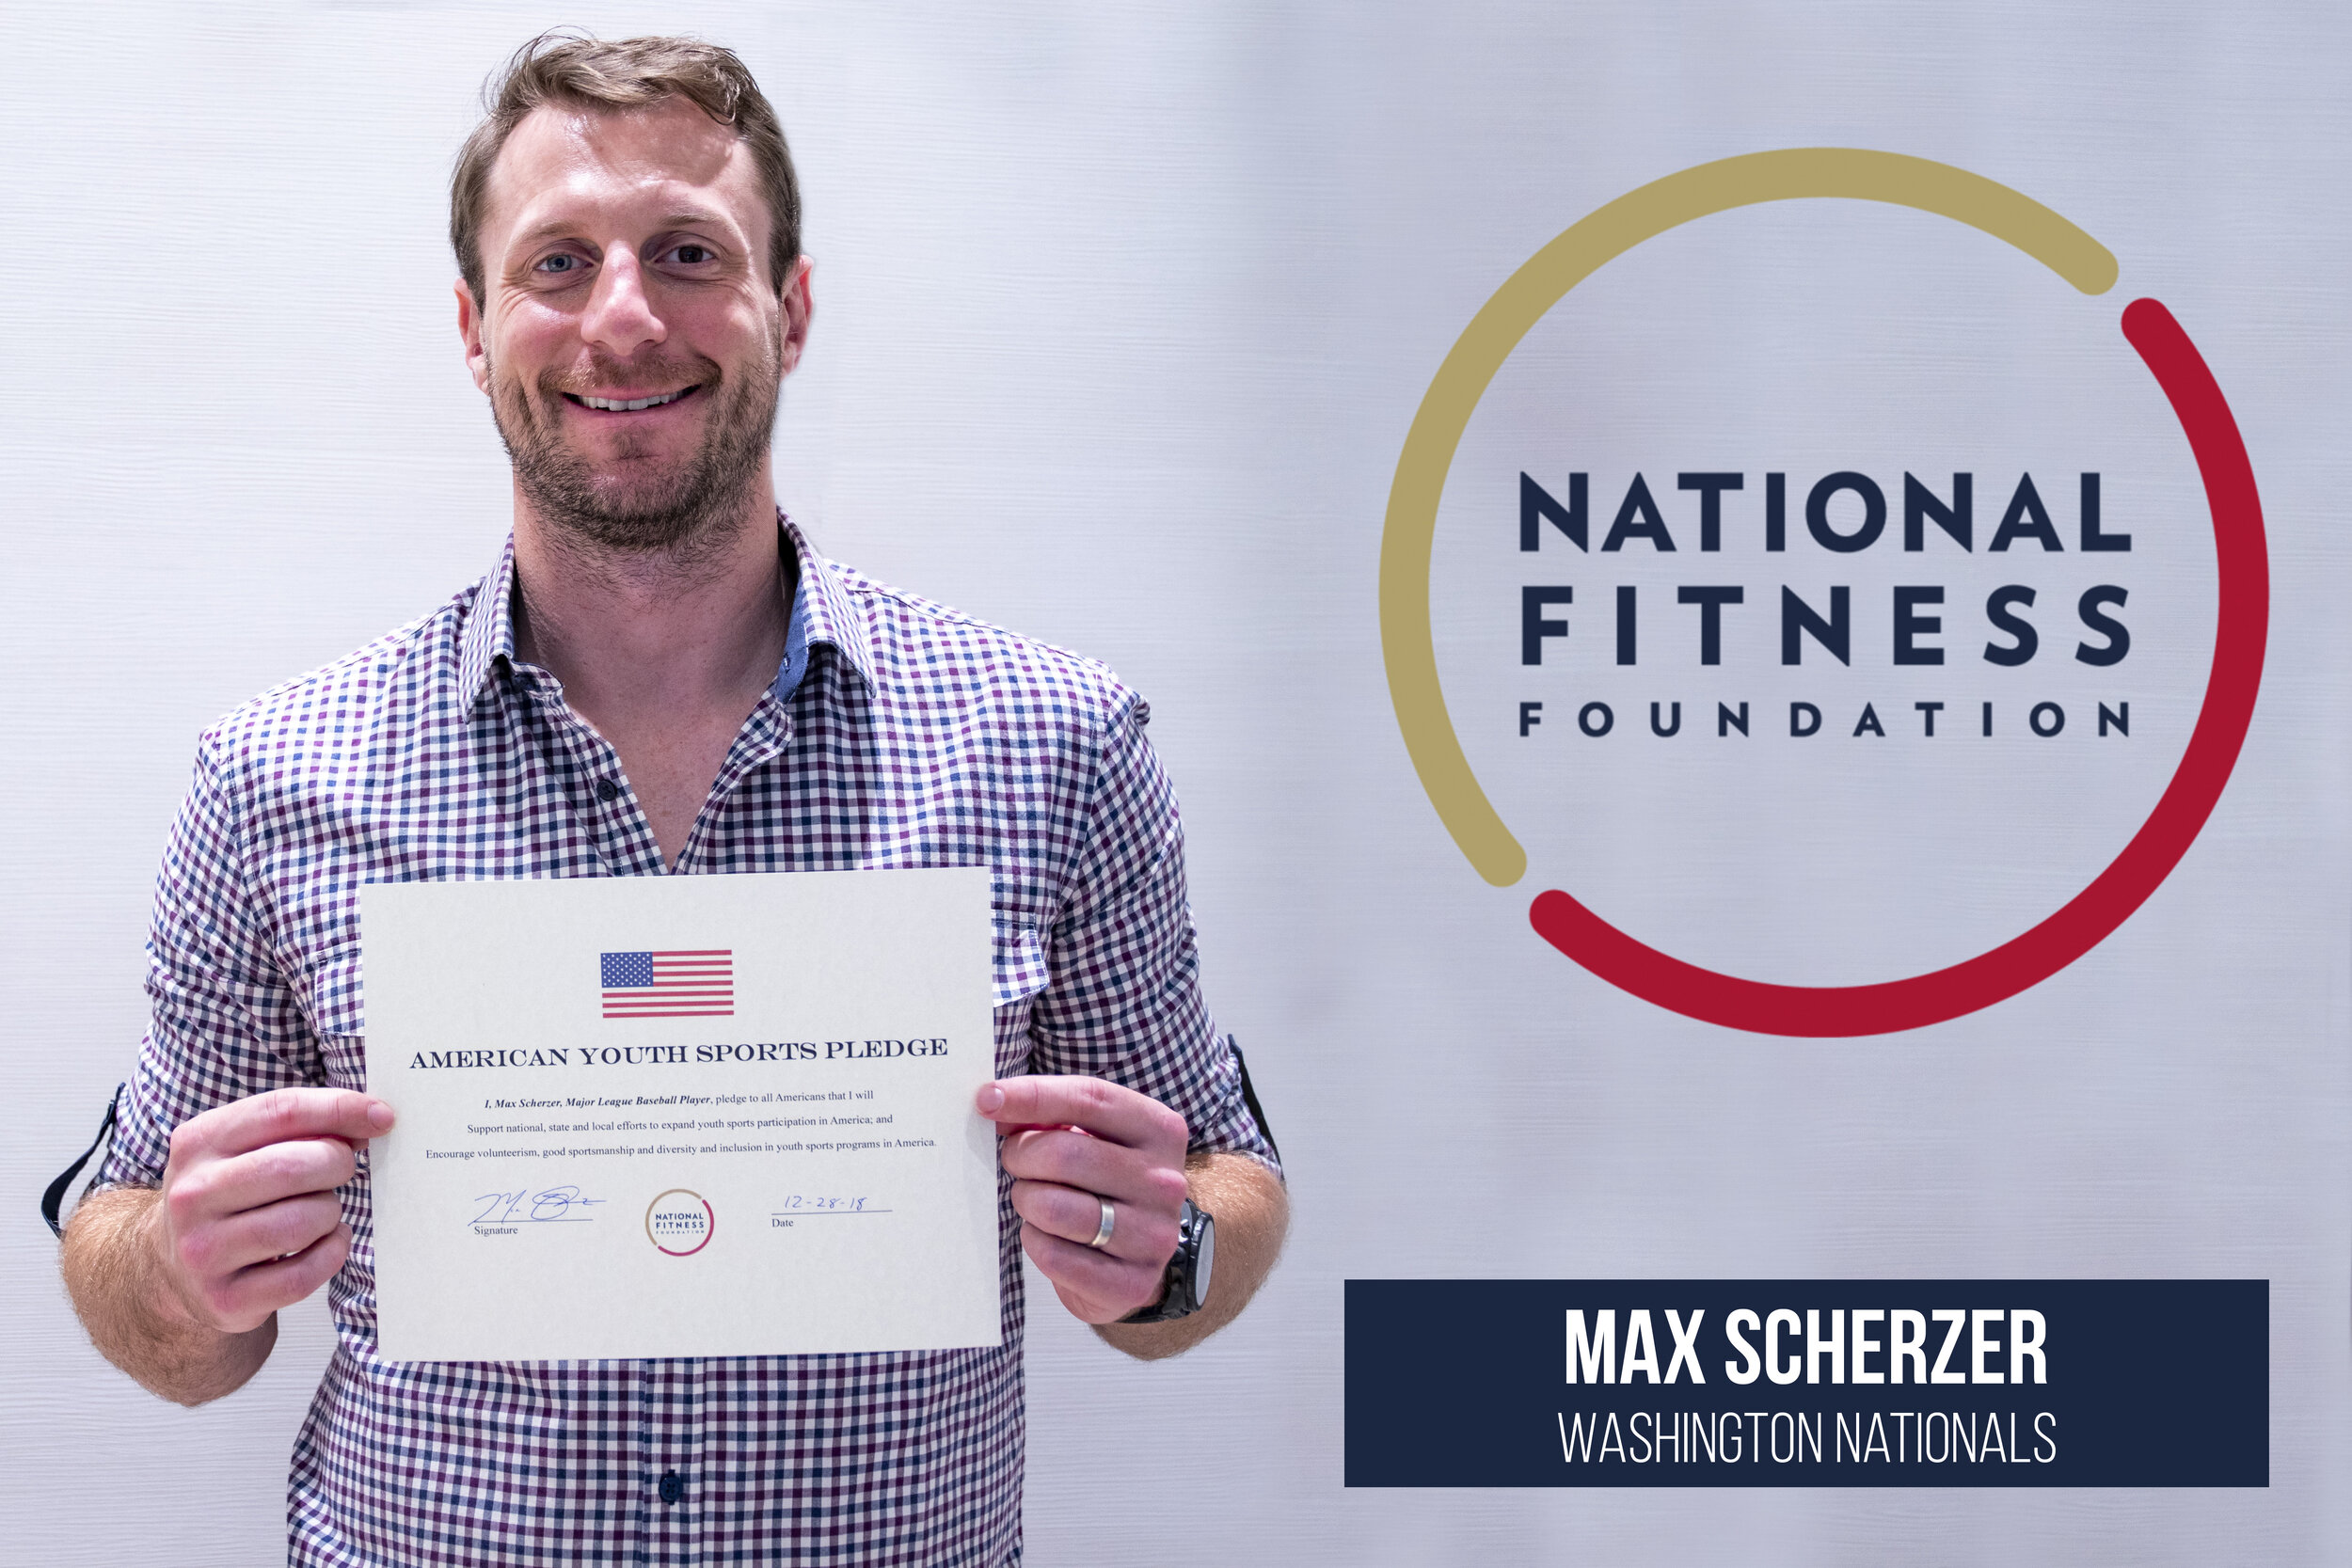  Washington Nationals starting pitcher, Max Scherzer, takes the American Youth Sports Pledge. 